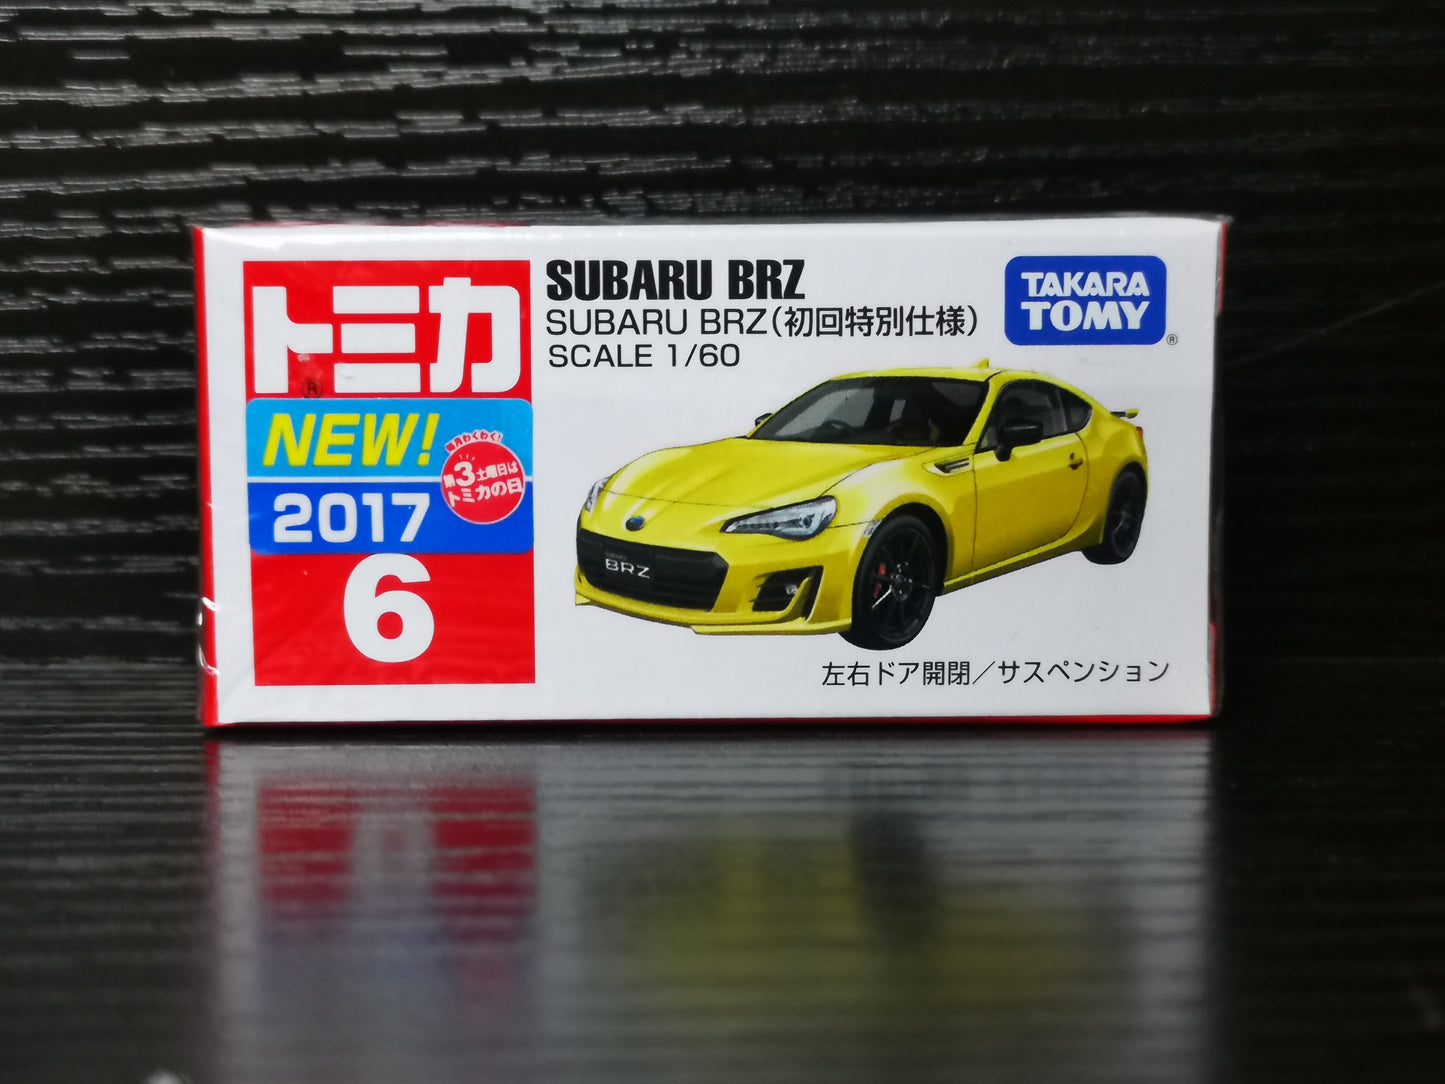 Tomica #6 Subaru Brz 1st edition